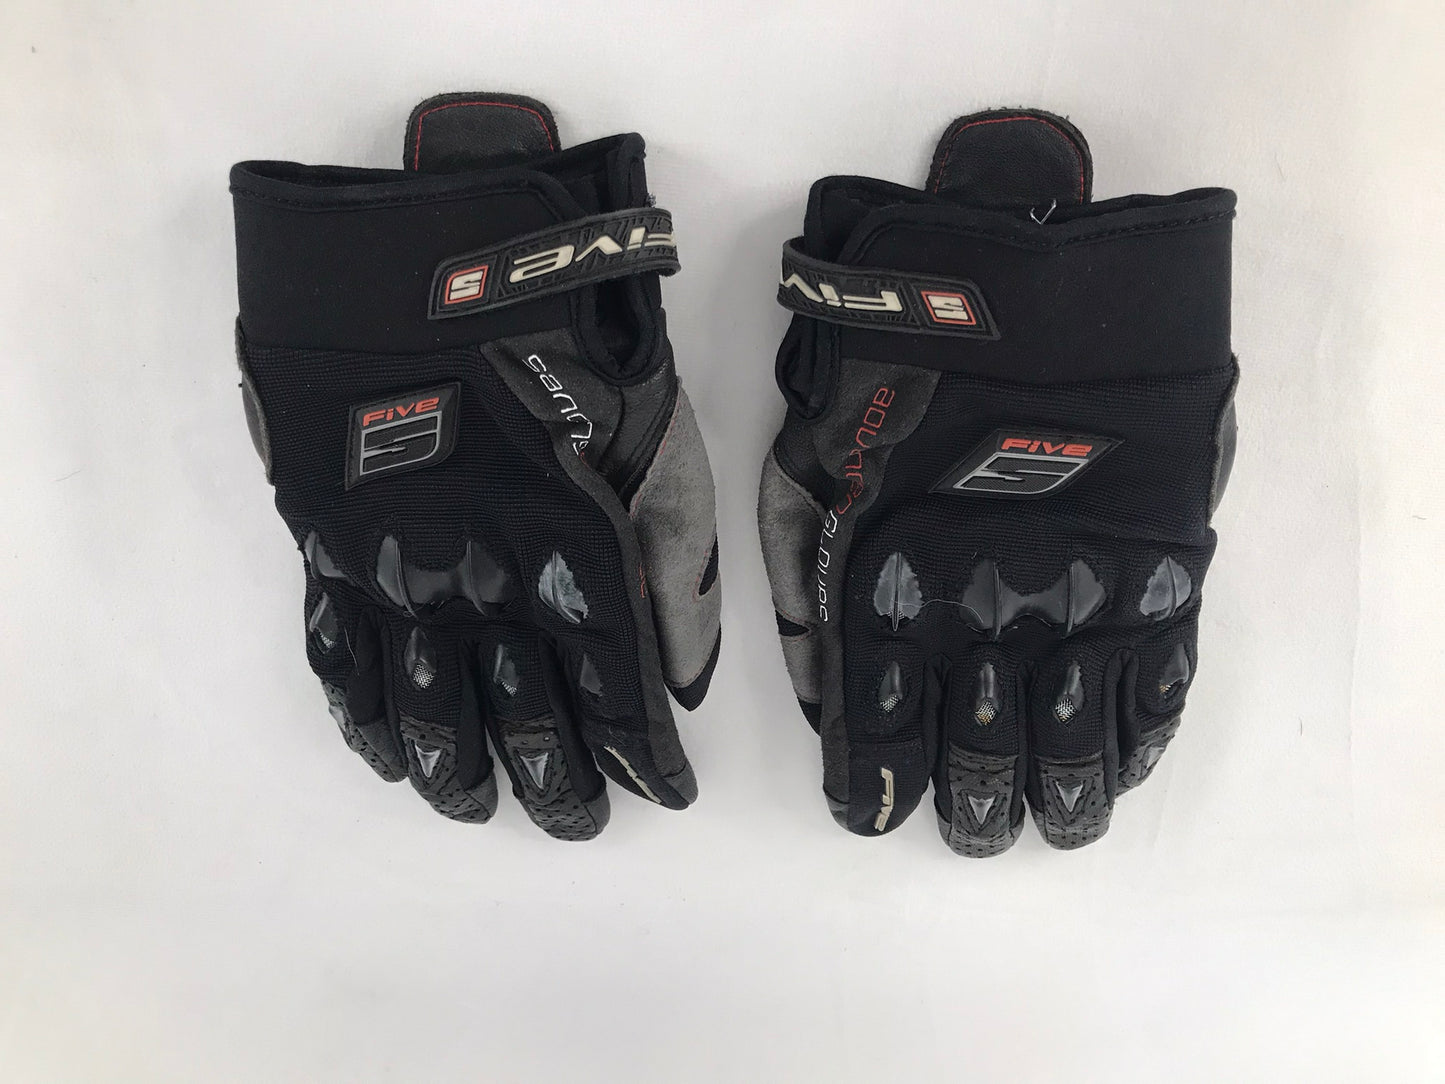 Motocross BMX Dirt Bike Bike Men's Size X Large Five Stunt Evo Gloves Leather Cloth Excellent Quality